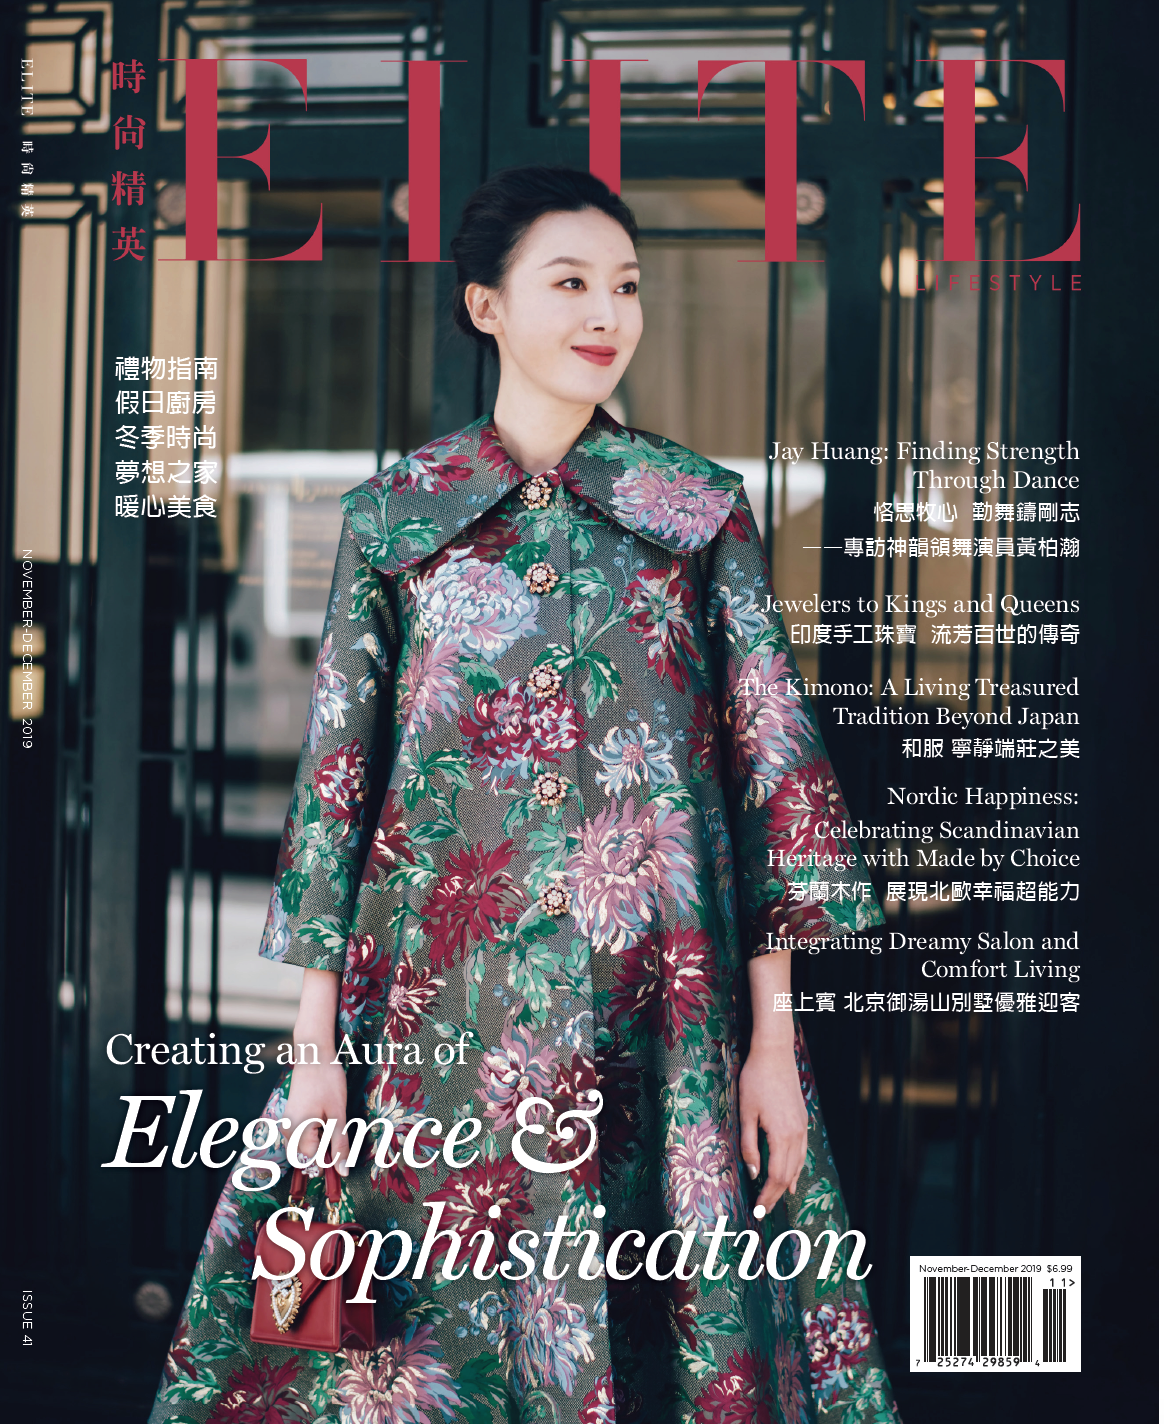 Dr. Lao featured in Elite magazine